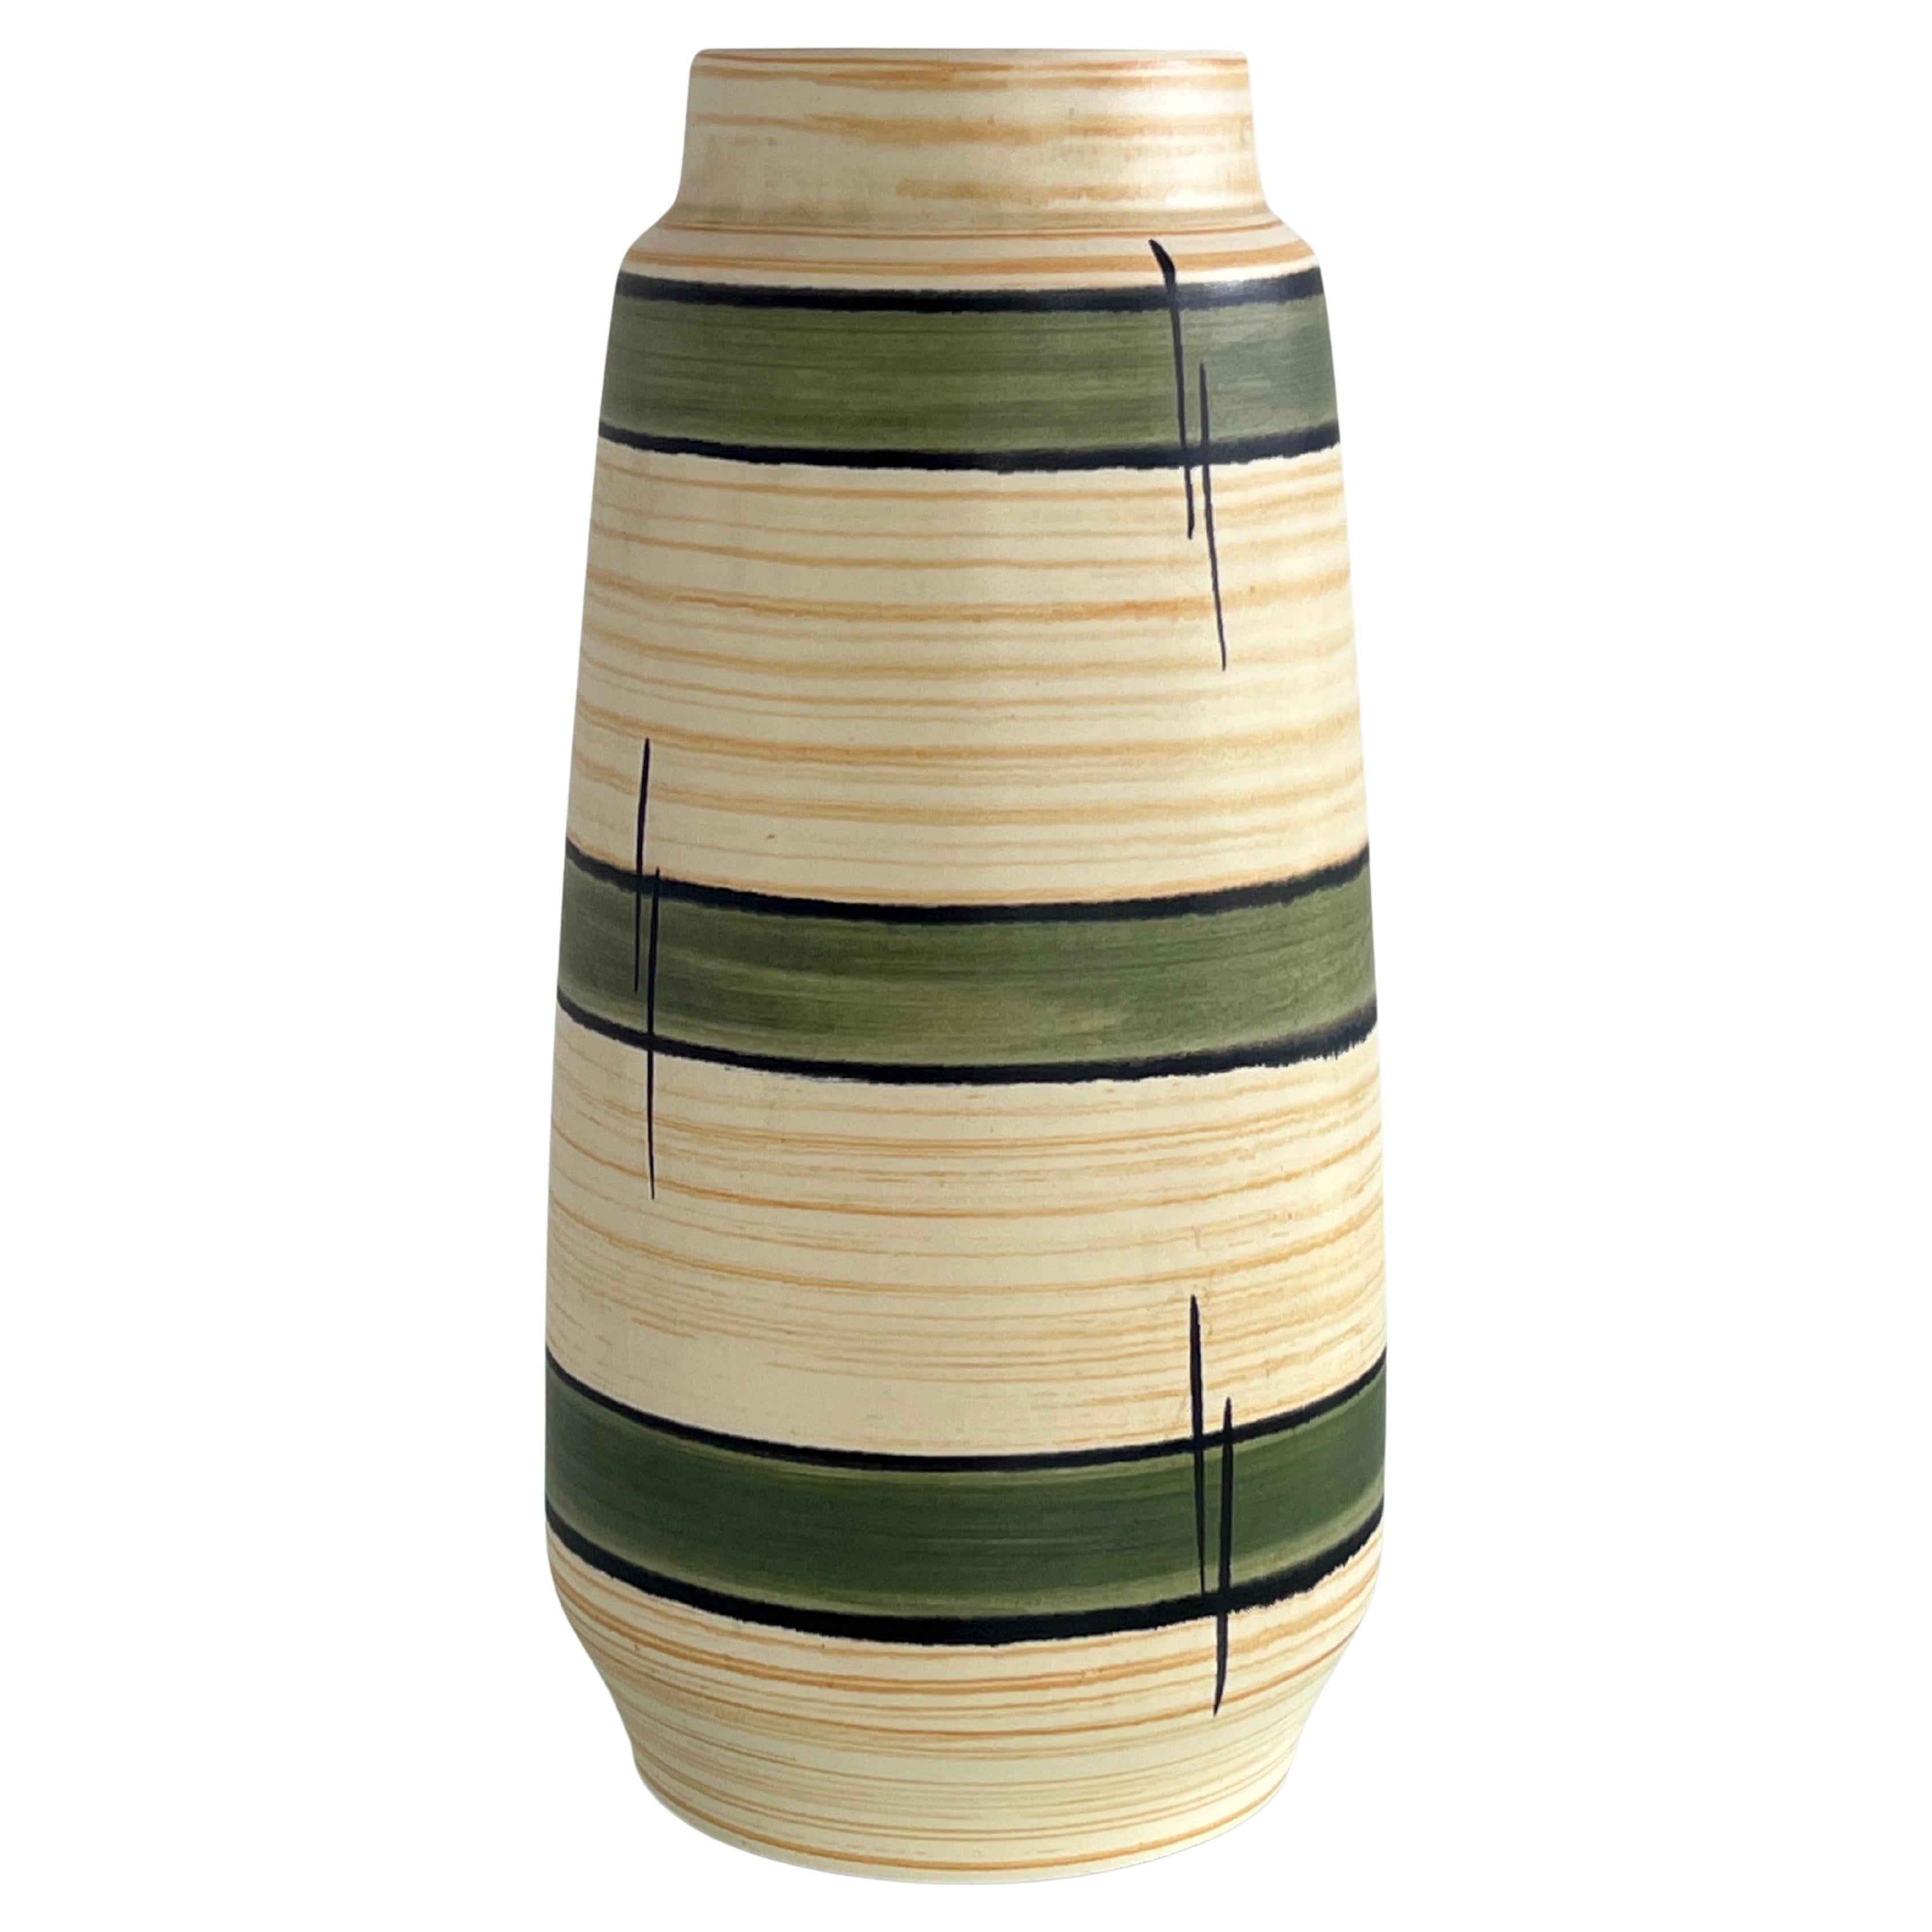 1960s West Germany Handmade Ceramic Vase